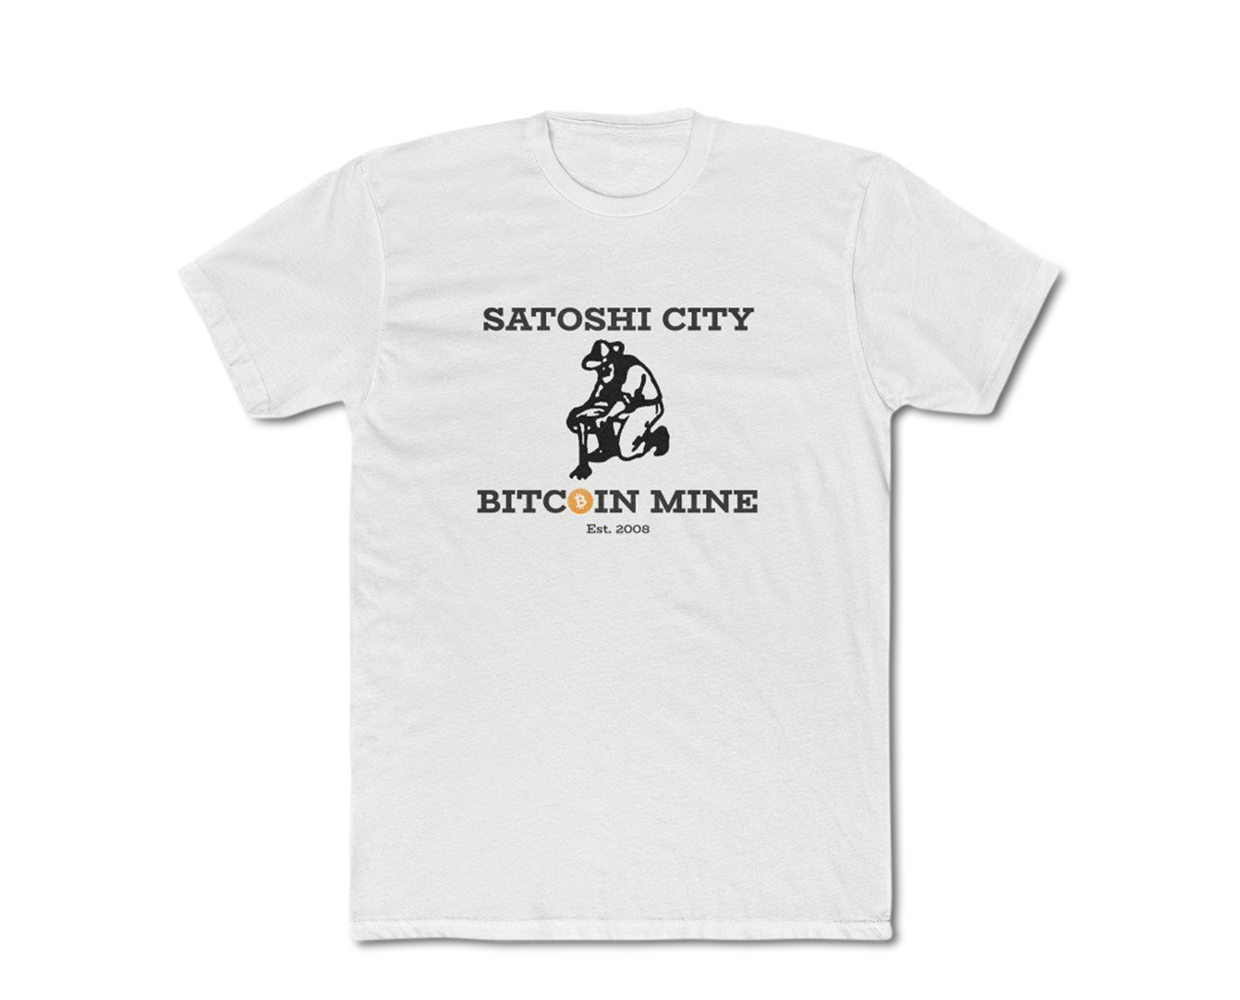 Satoshi Mine Tee Shirt